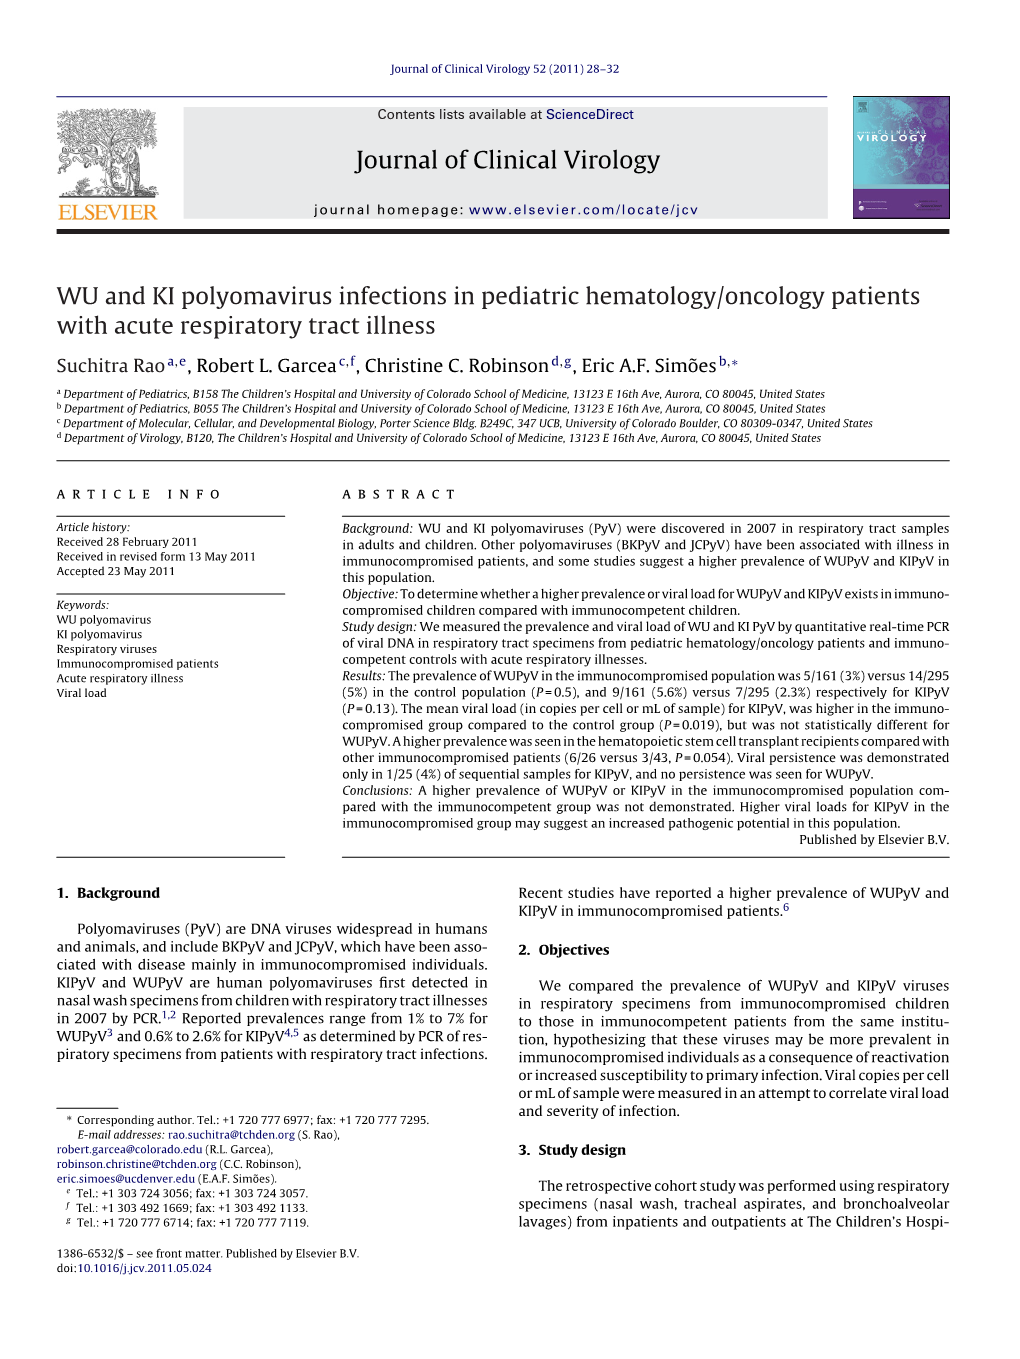 WU and KI Polyomavirus Infections in Pediatric Hematology/Oncology Patients